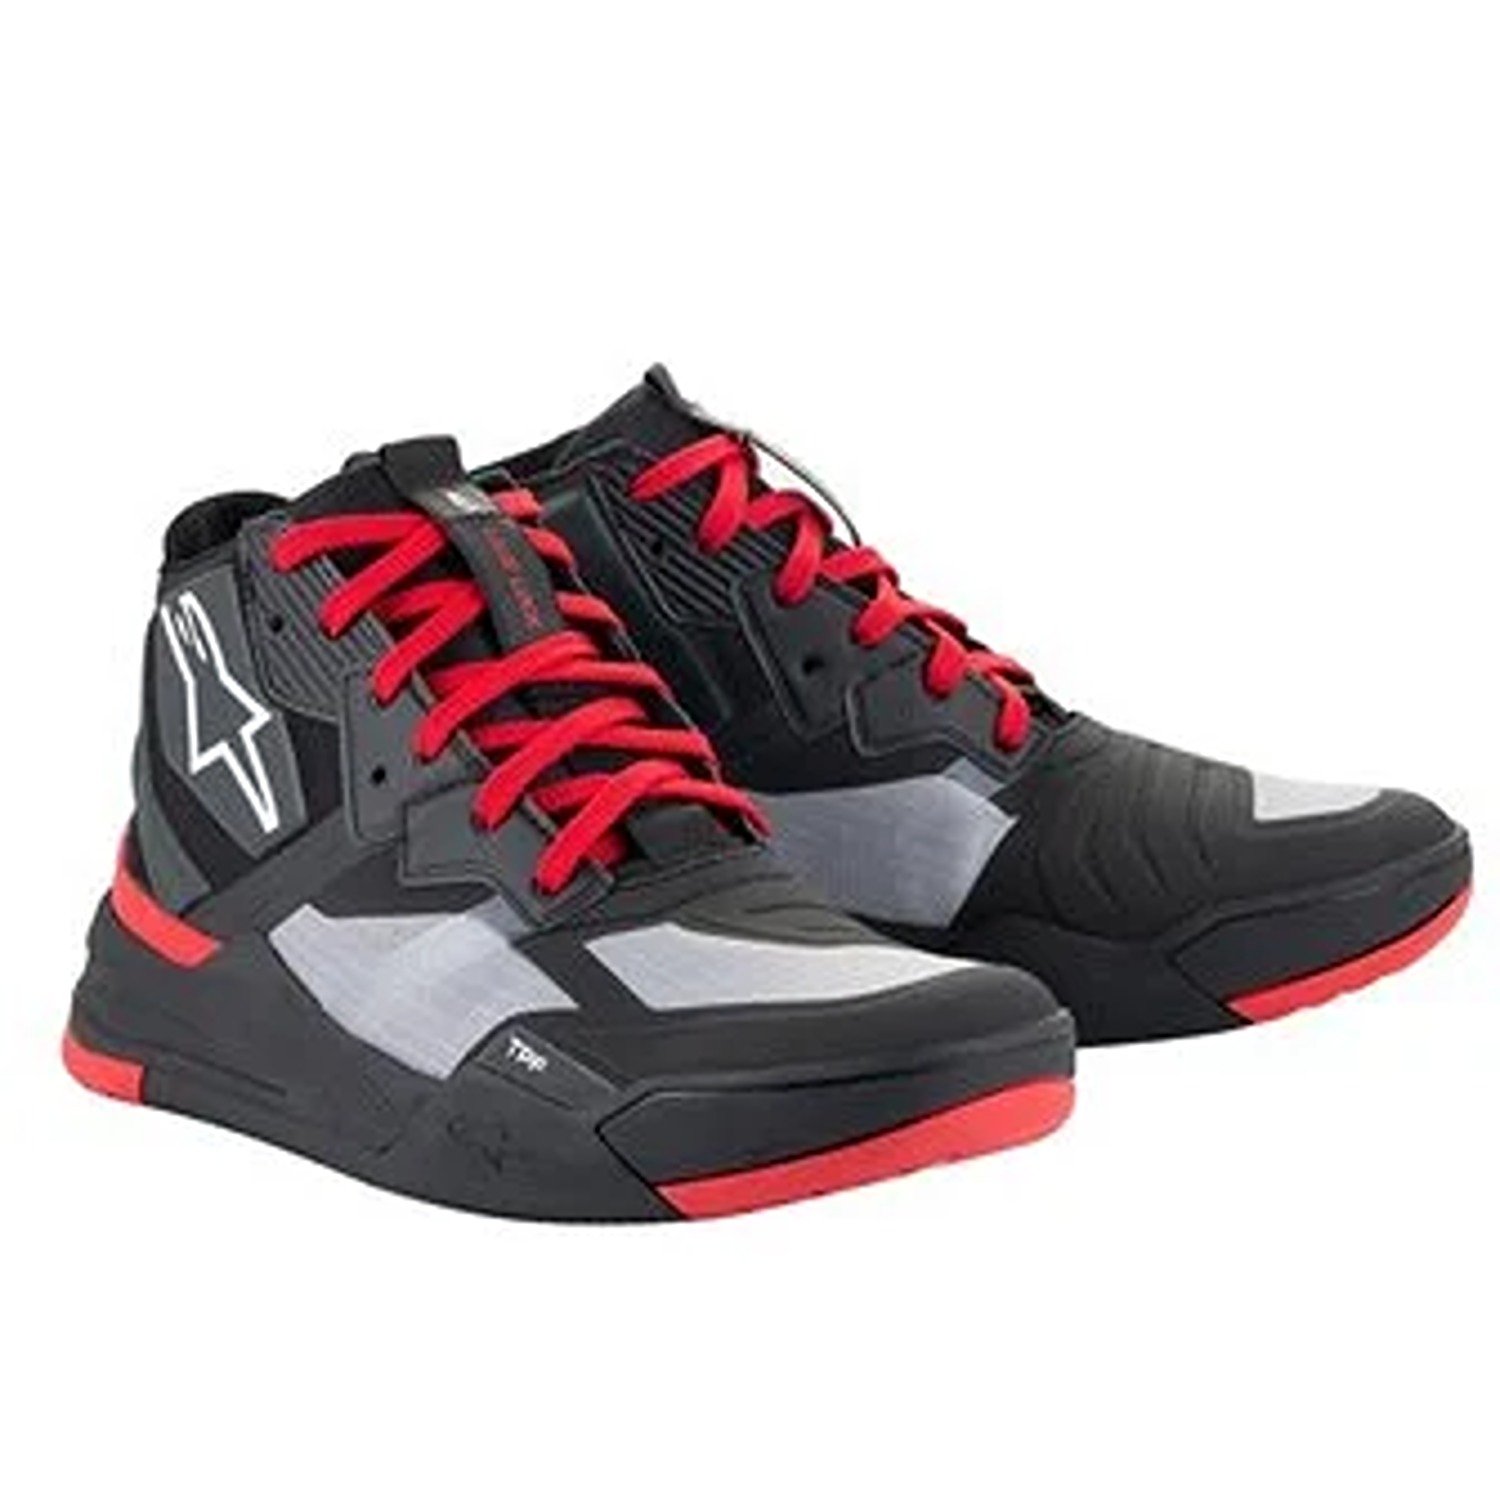 Image of Alpinestars Speedflight Shoes Black Bright Red White Size US 11 ID 8059347262970